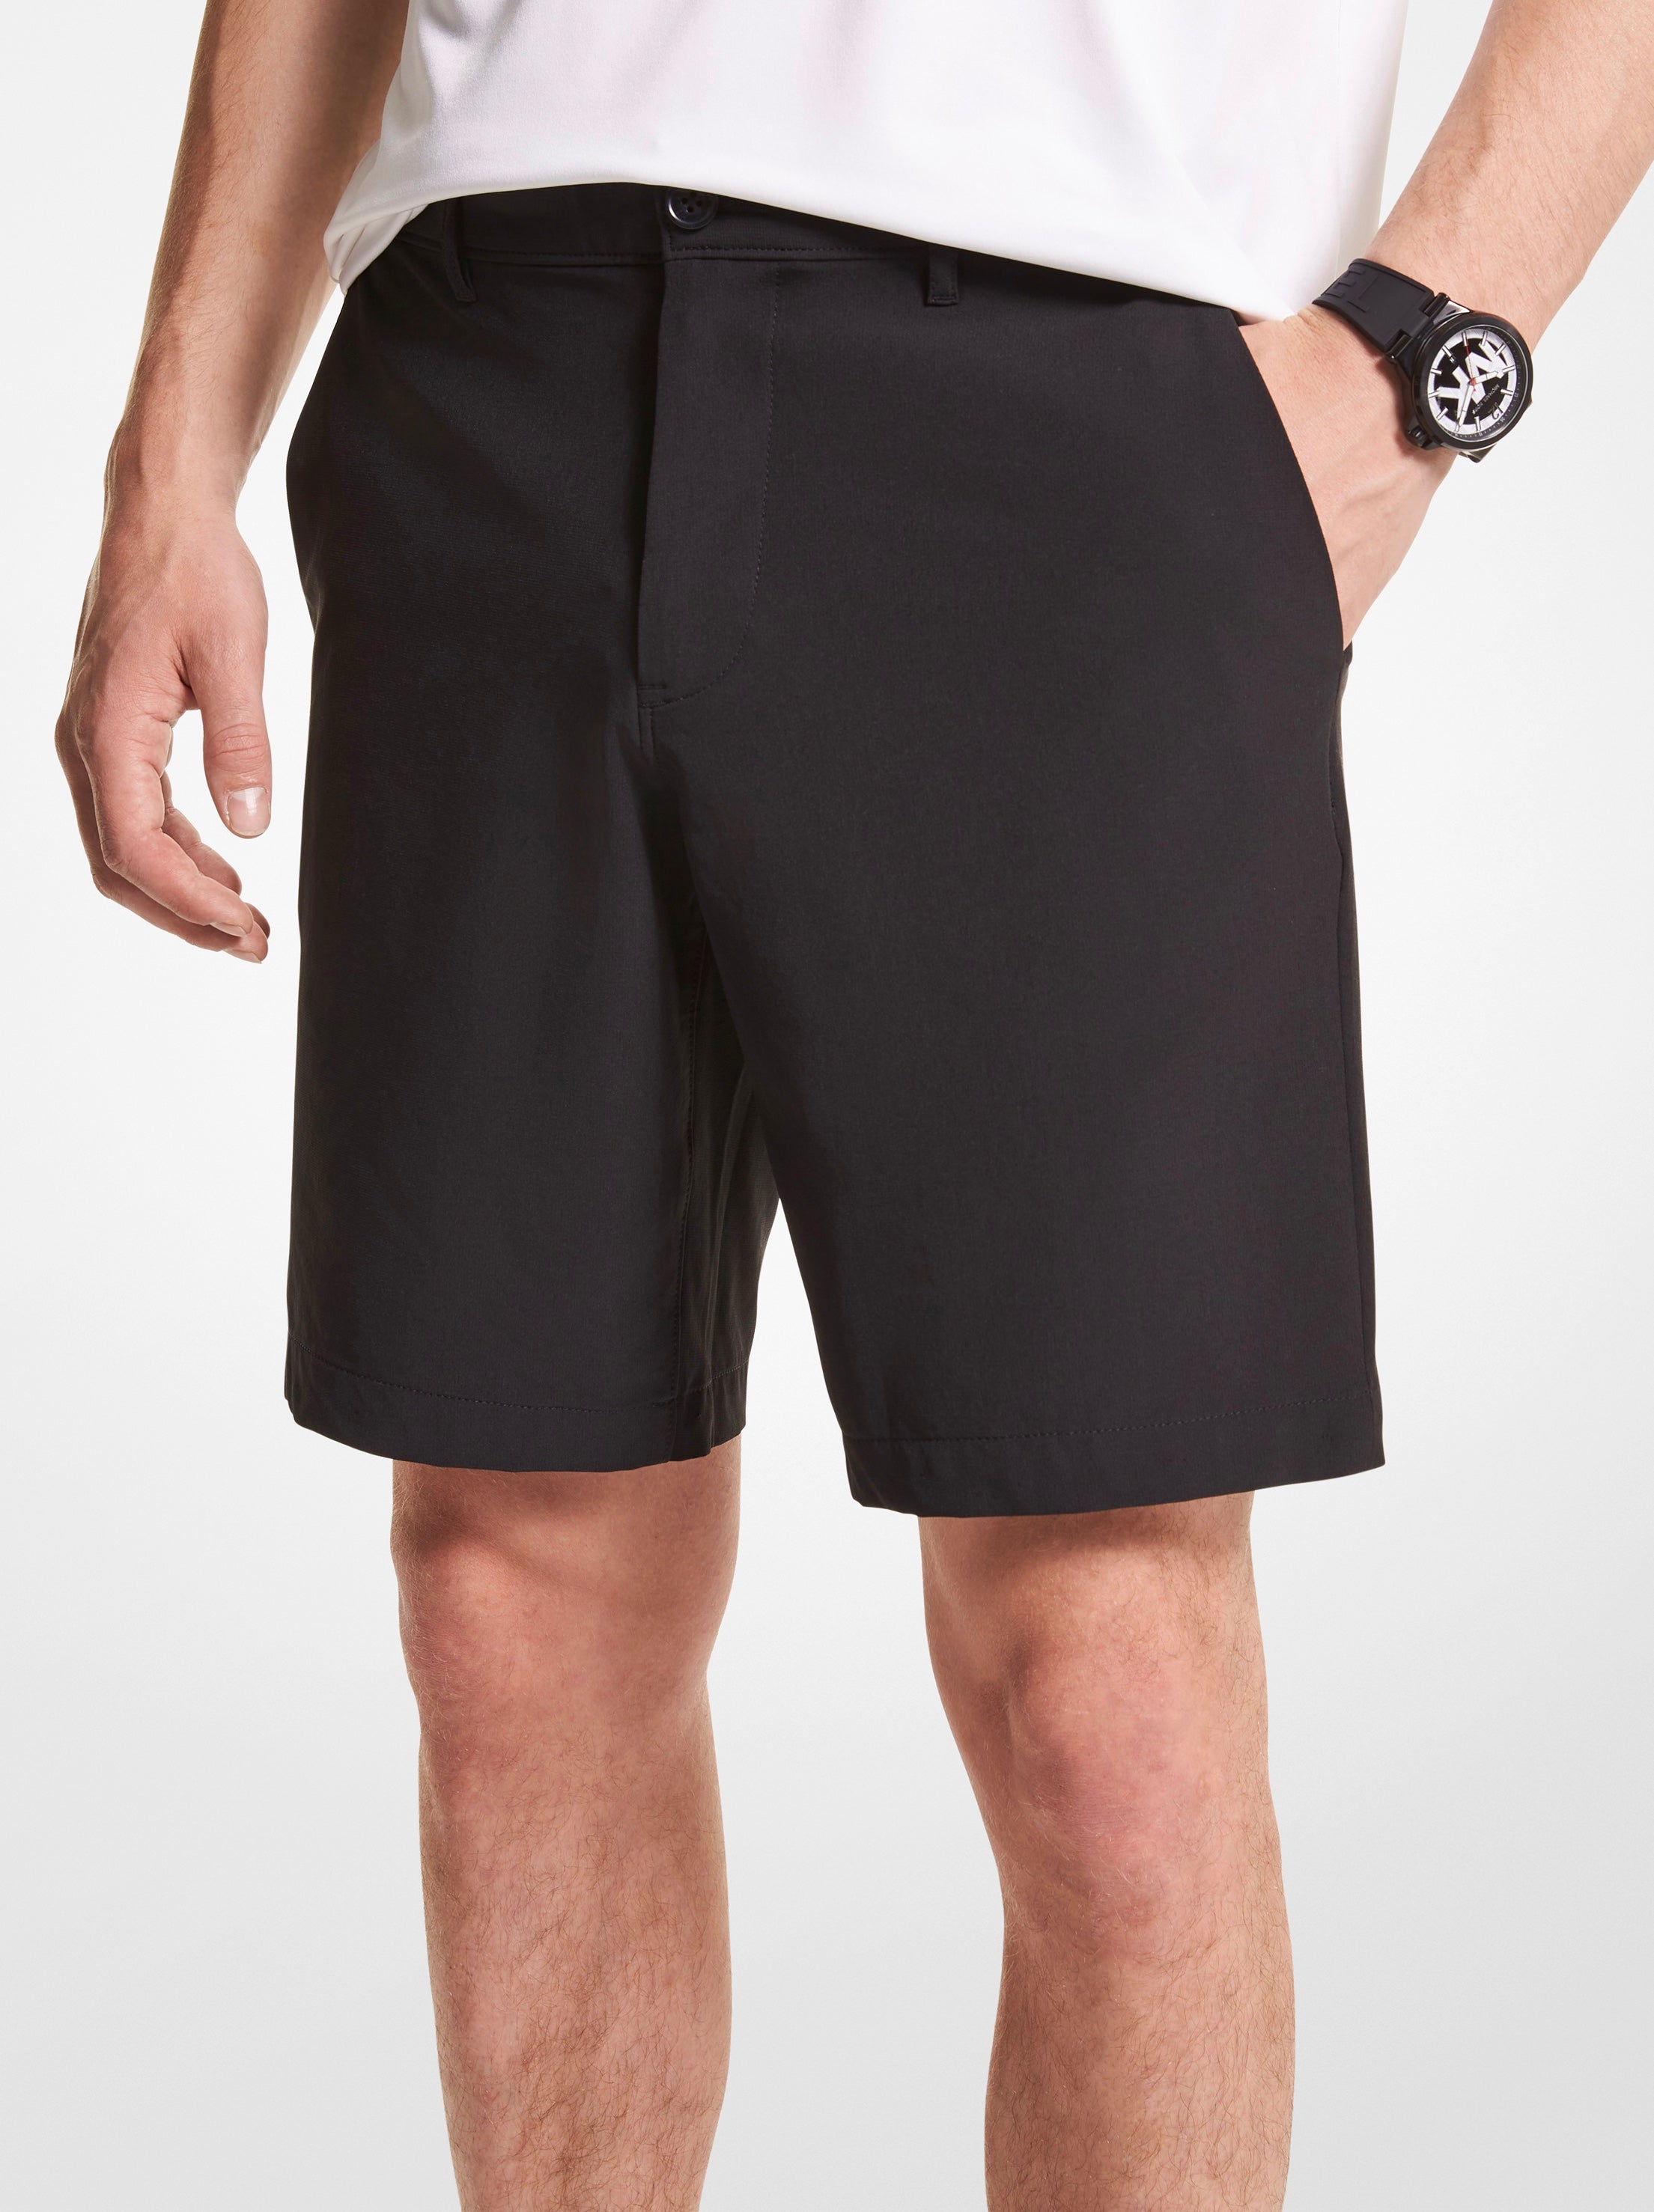 Michael Kors Slim Fit Stretch Black Chino Shorts